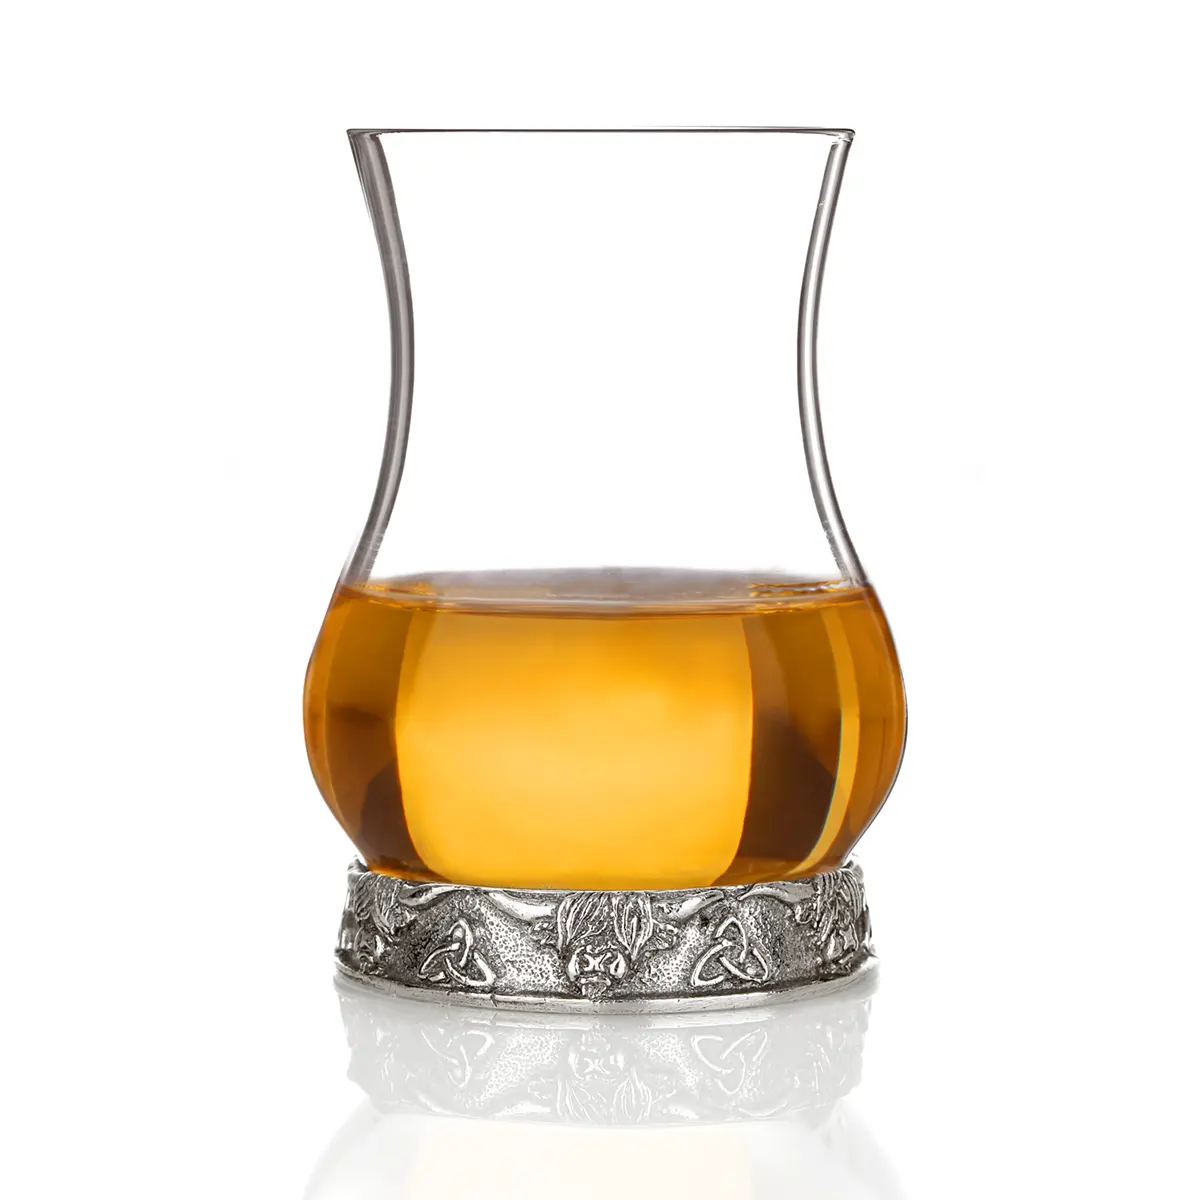 Highland Cow Whisky Tasting Glas - Handgefertigtes Whiskyglas aus England